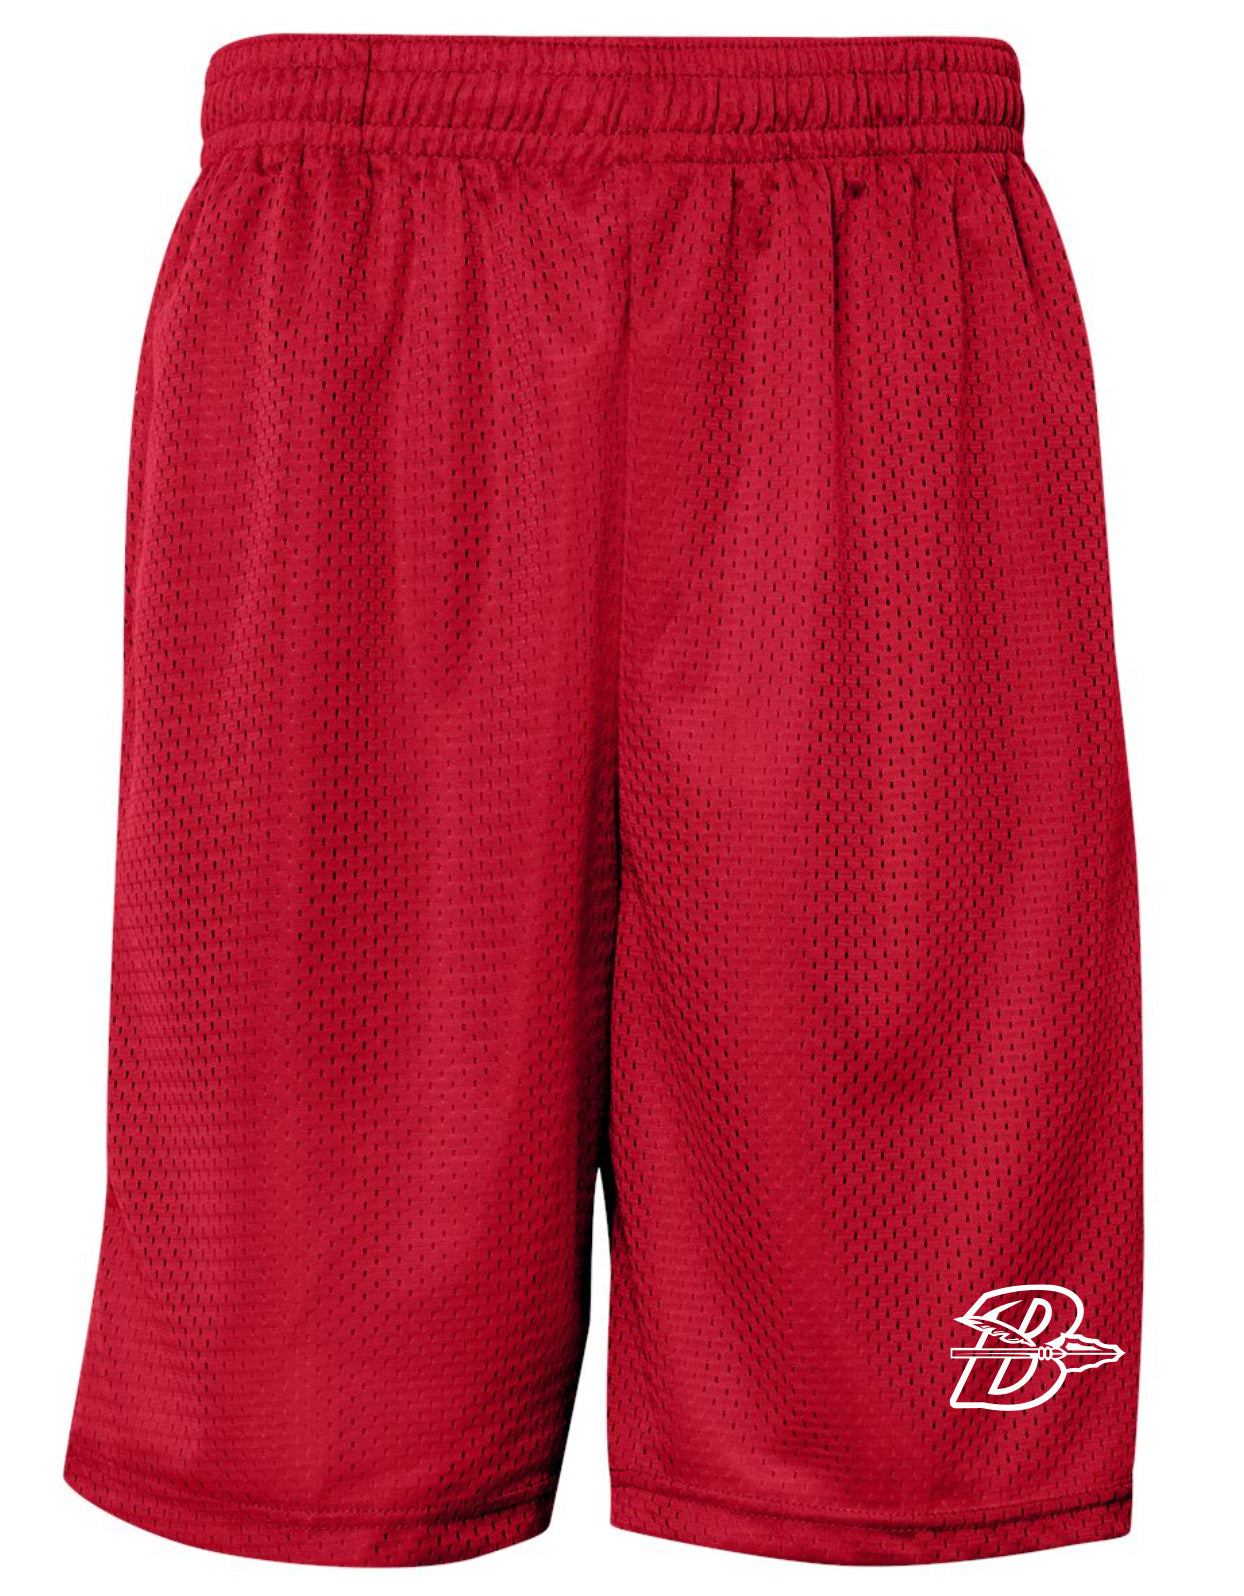 Bellmore Braves Shorts